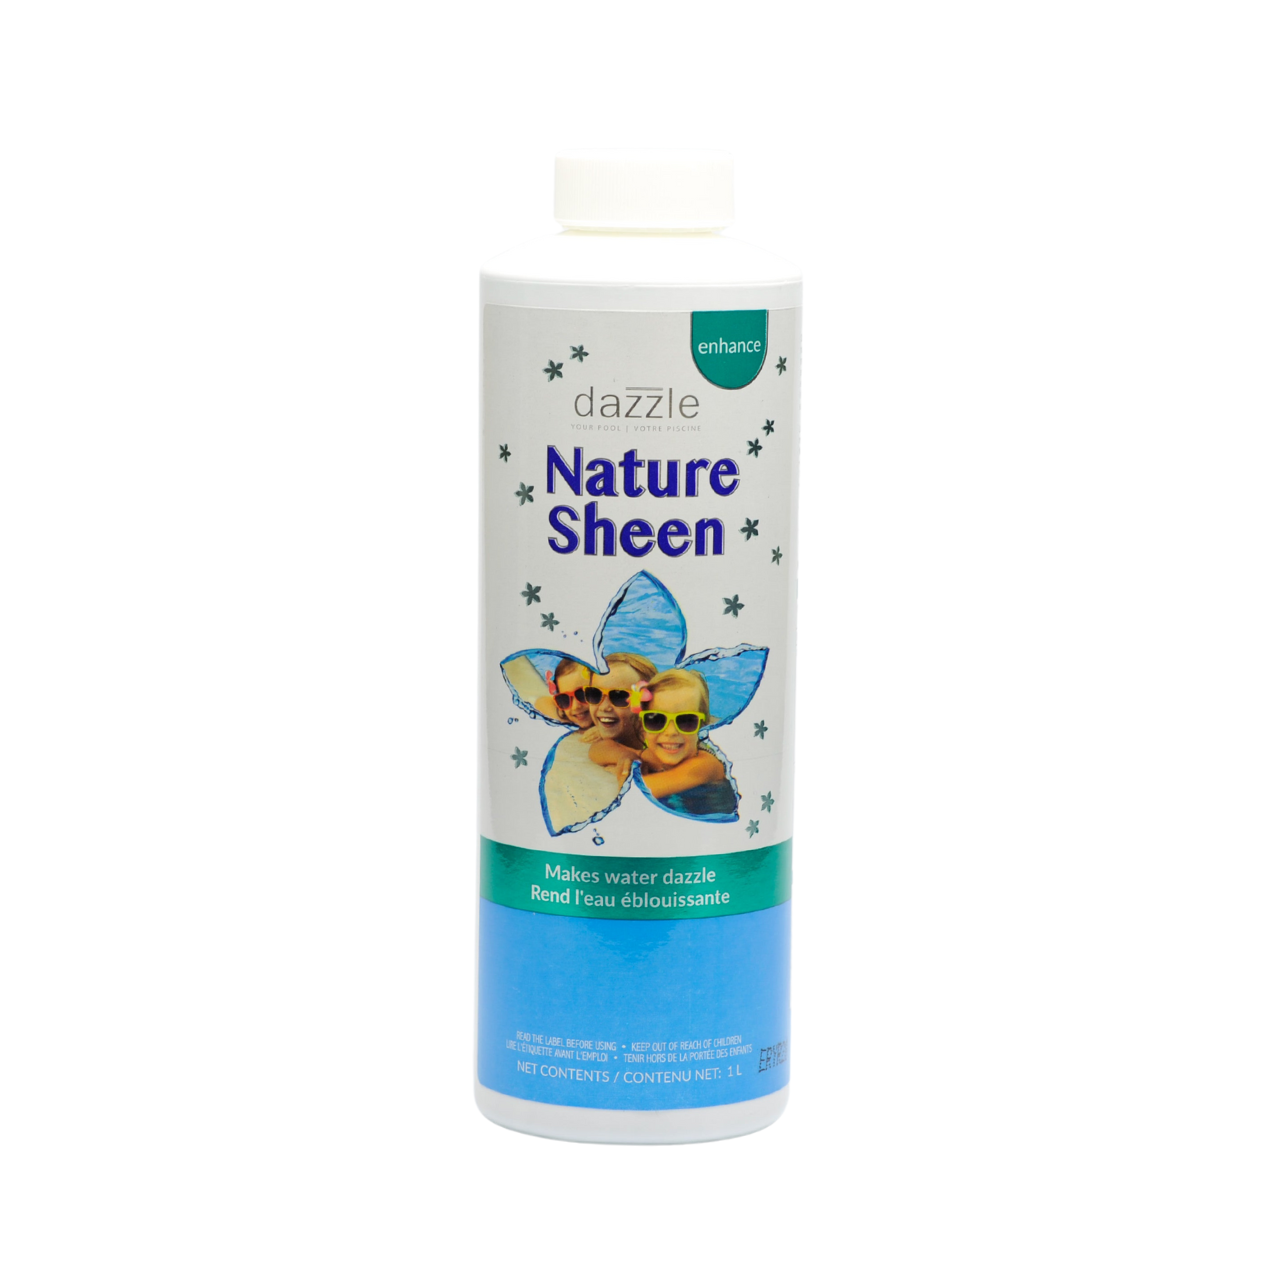 Dazzle™ Nature Sheen - Makes water dazzle